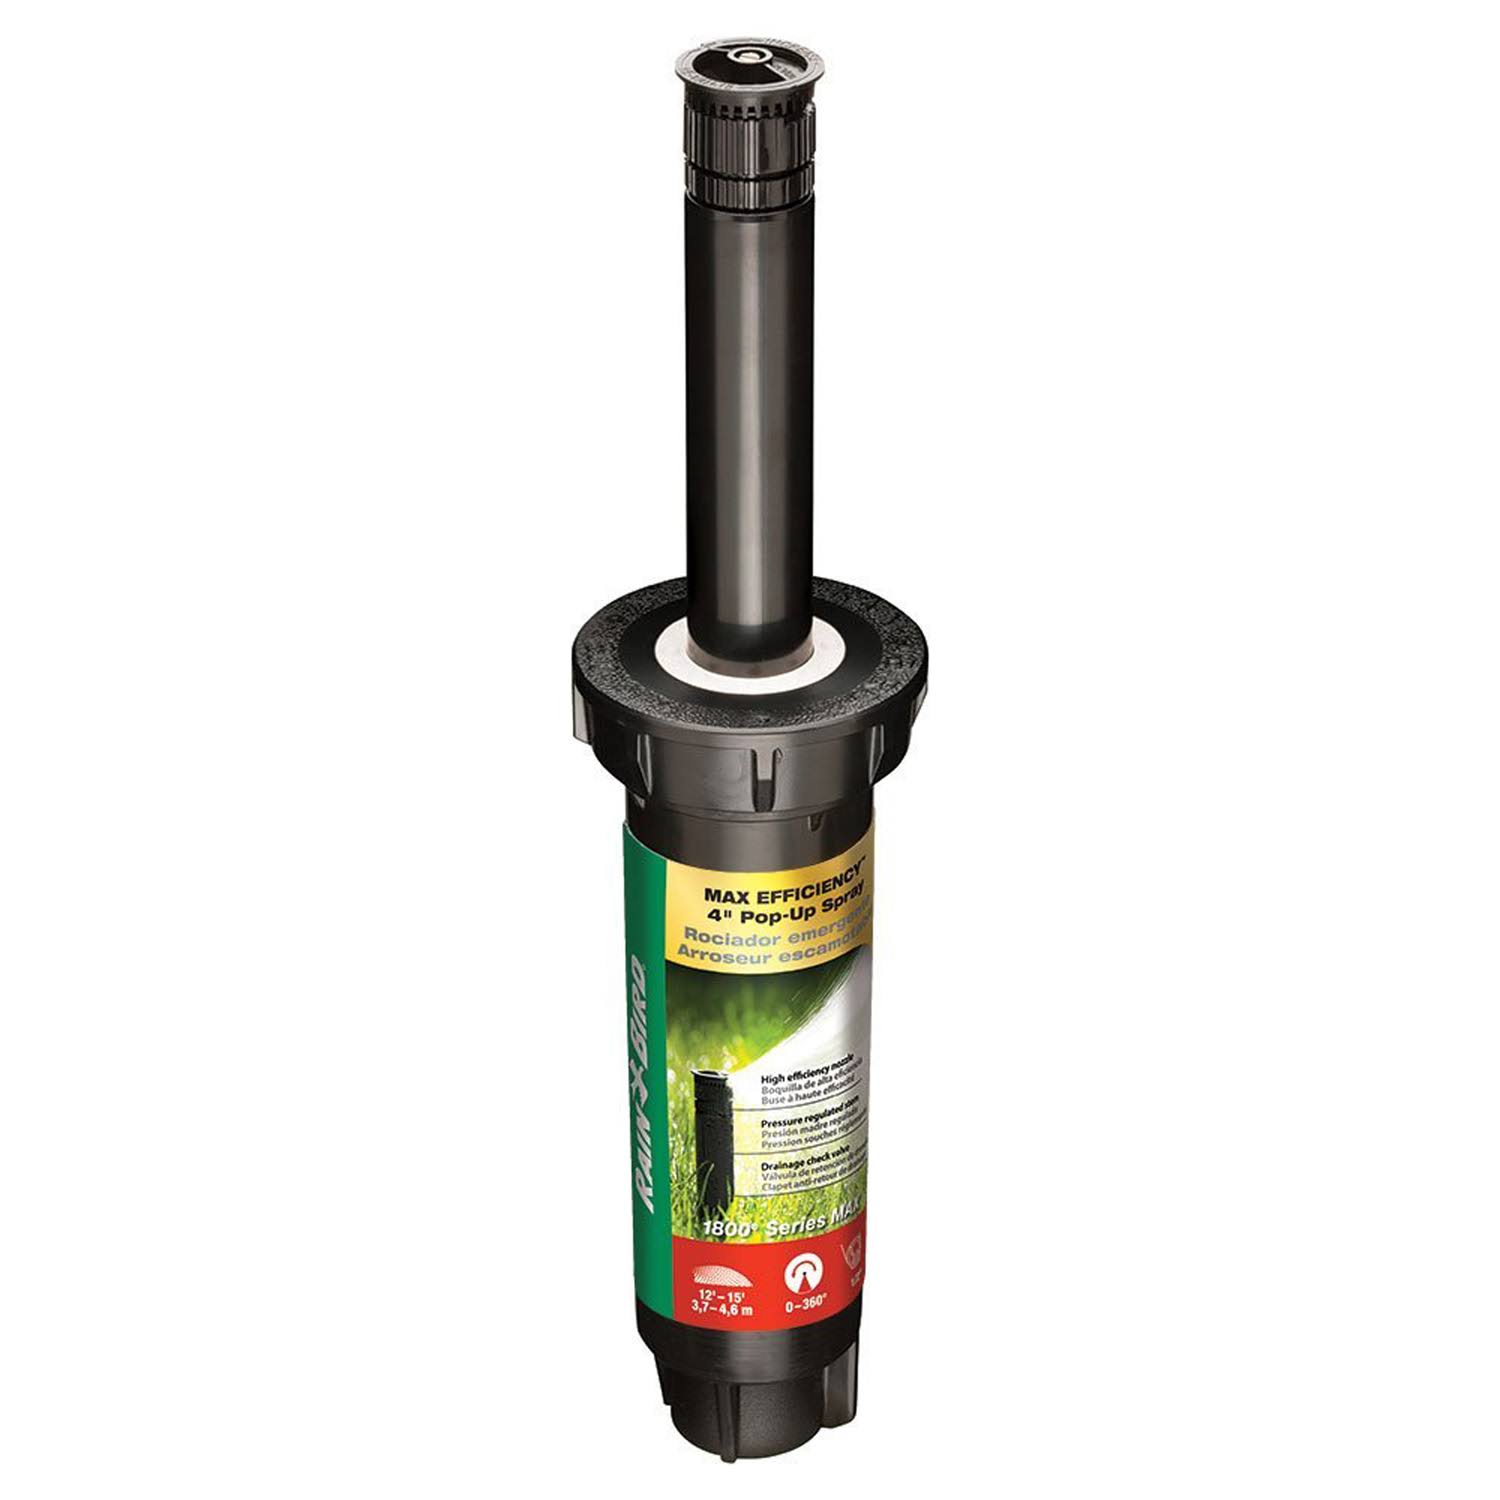 Rain Bird 1800 Professional Series Adjustable Pop-up Spray Head Sprinkler - 1/2", 8' to 15'